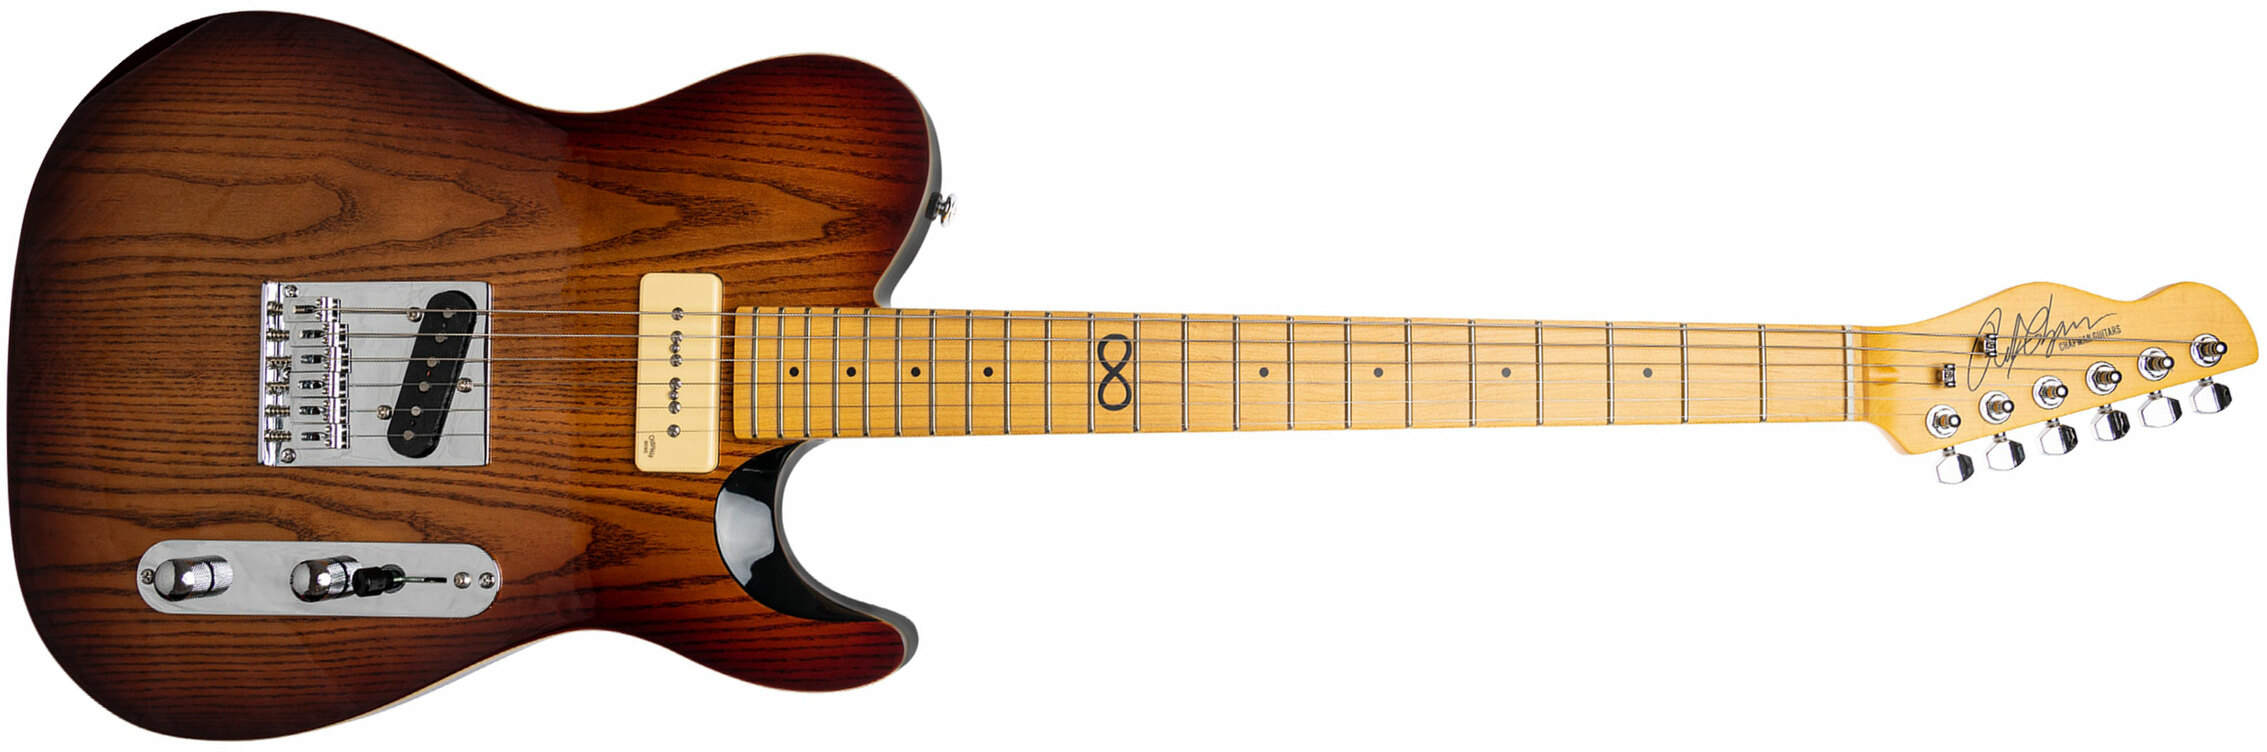 Chapman Guitars Ml3 Traditional Standard Sp90 Ht Mn - Tobacco Ash - Televorm elektrische gitaar - Main picture